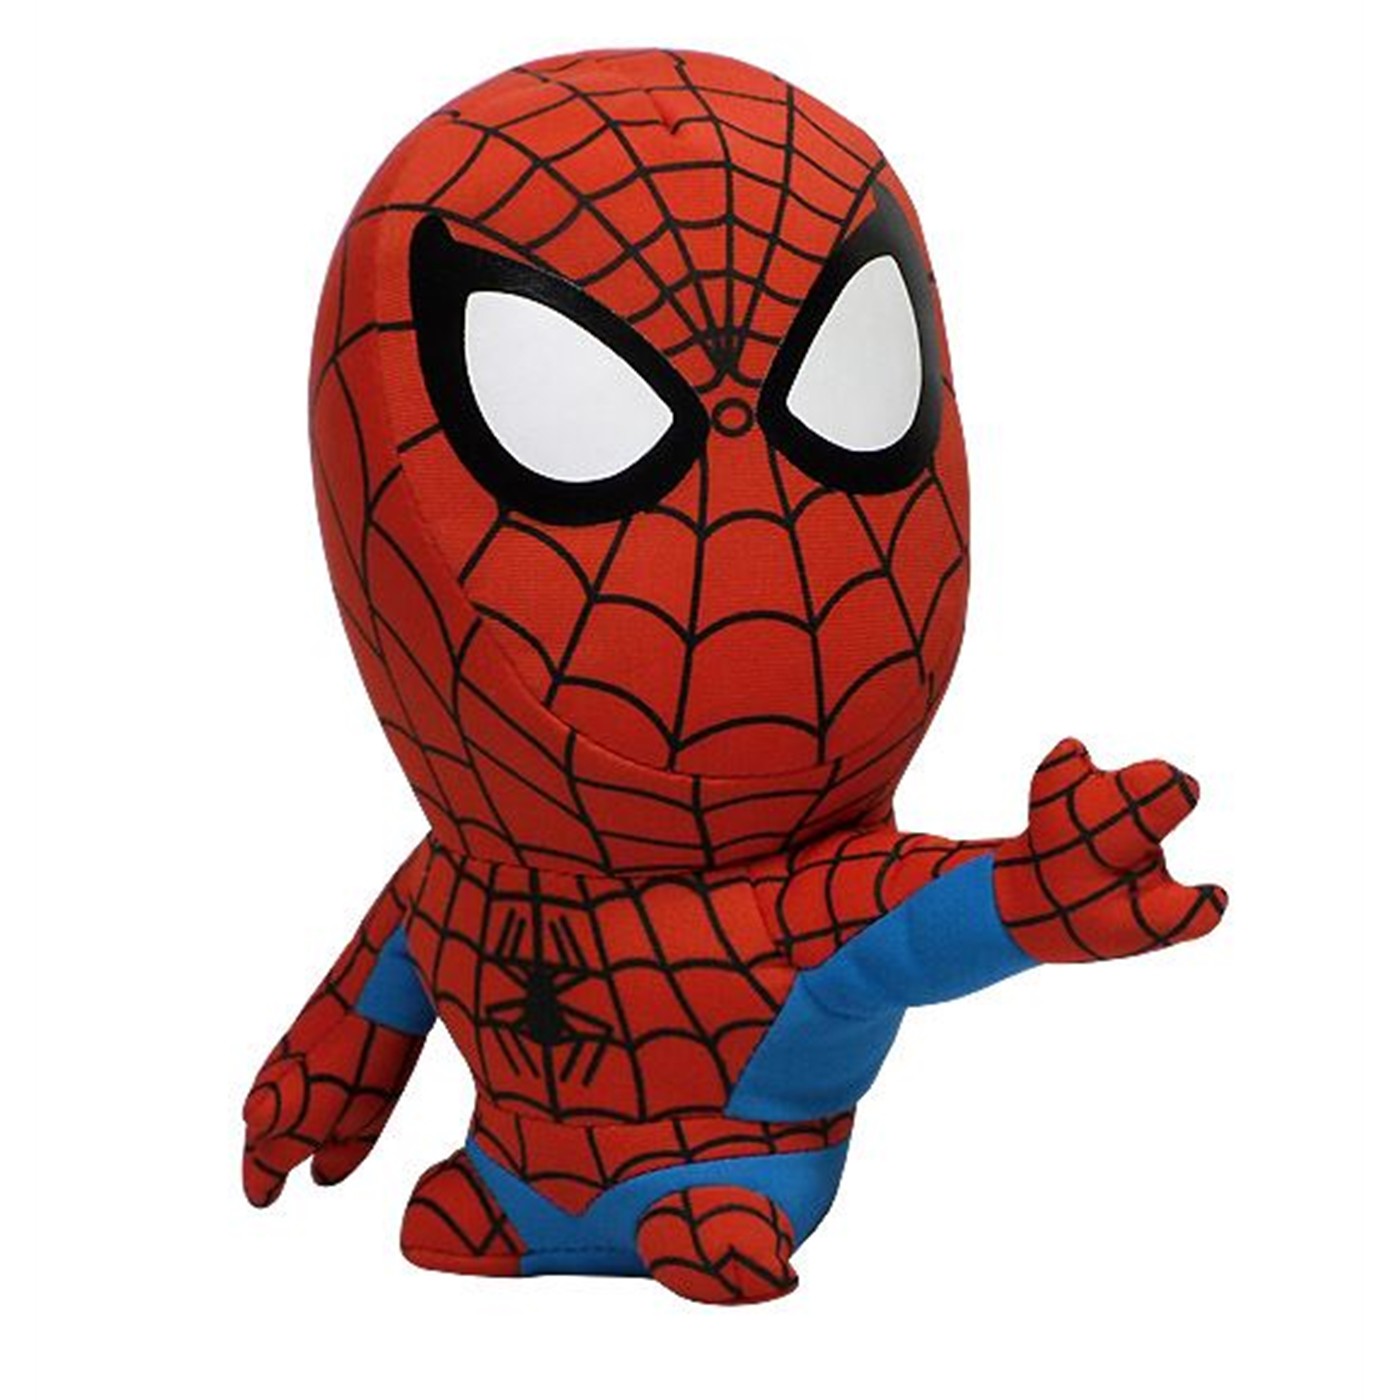 Spiderman Super Deformed Plush Toy